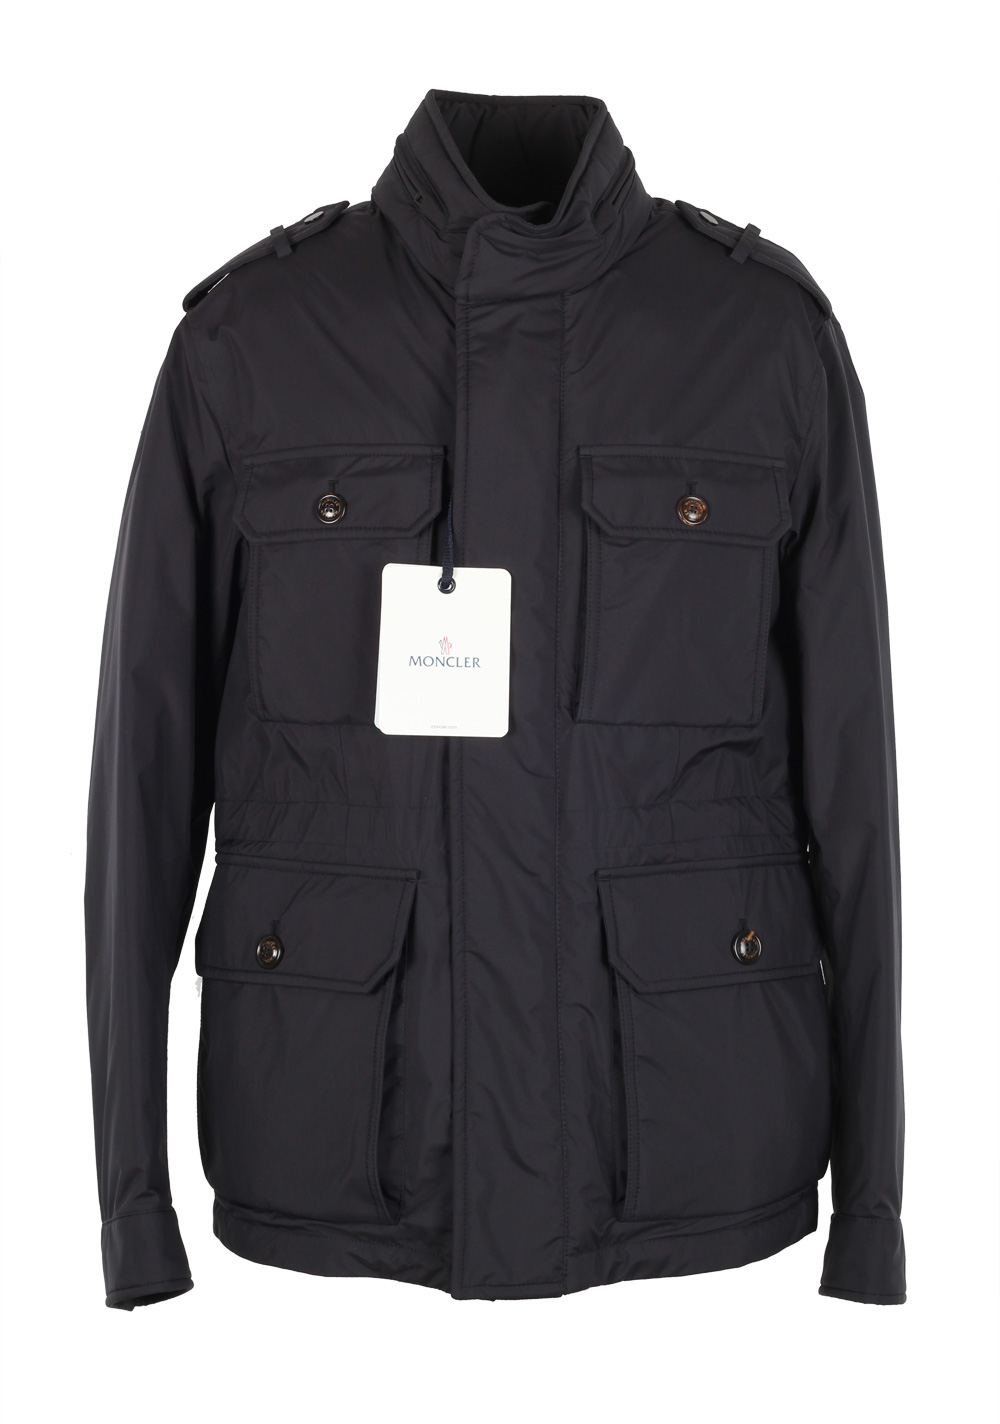 moncler jacket size 7